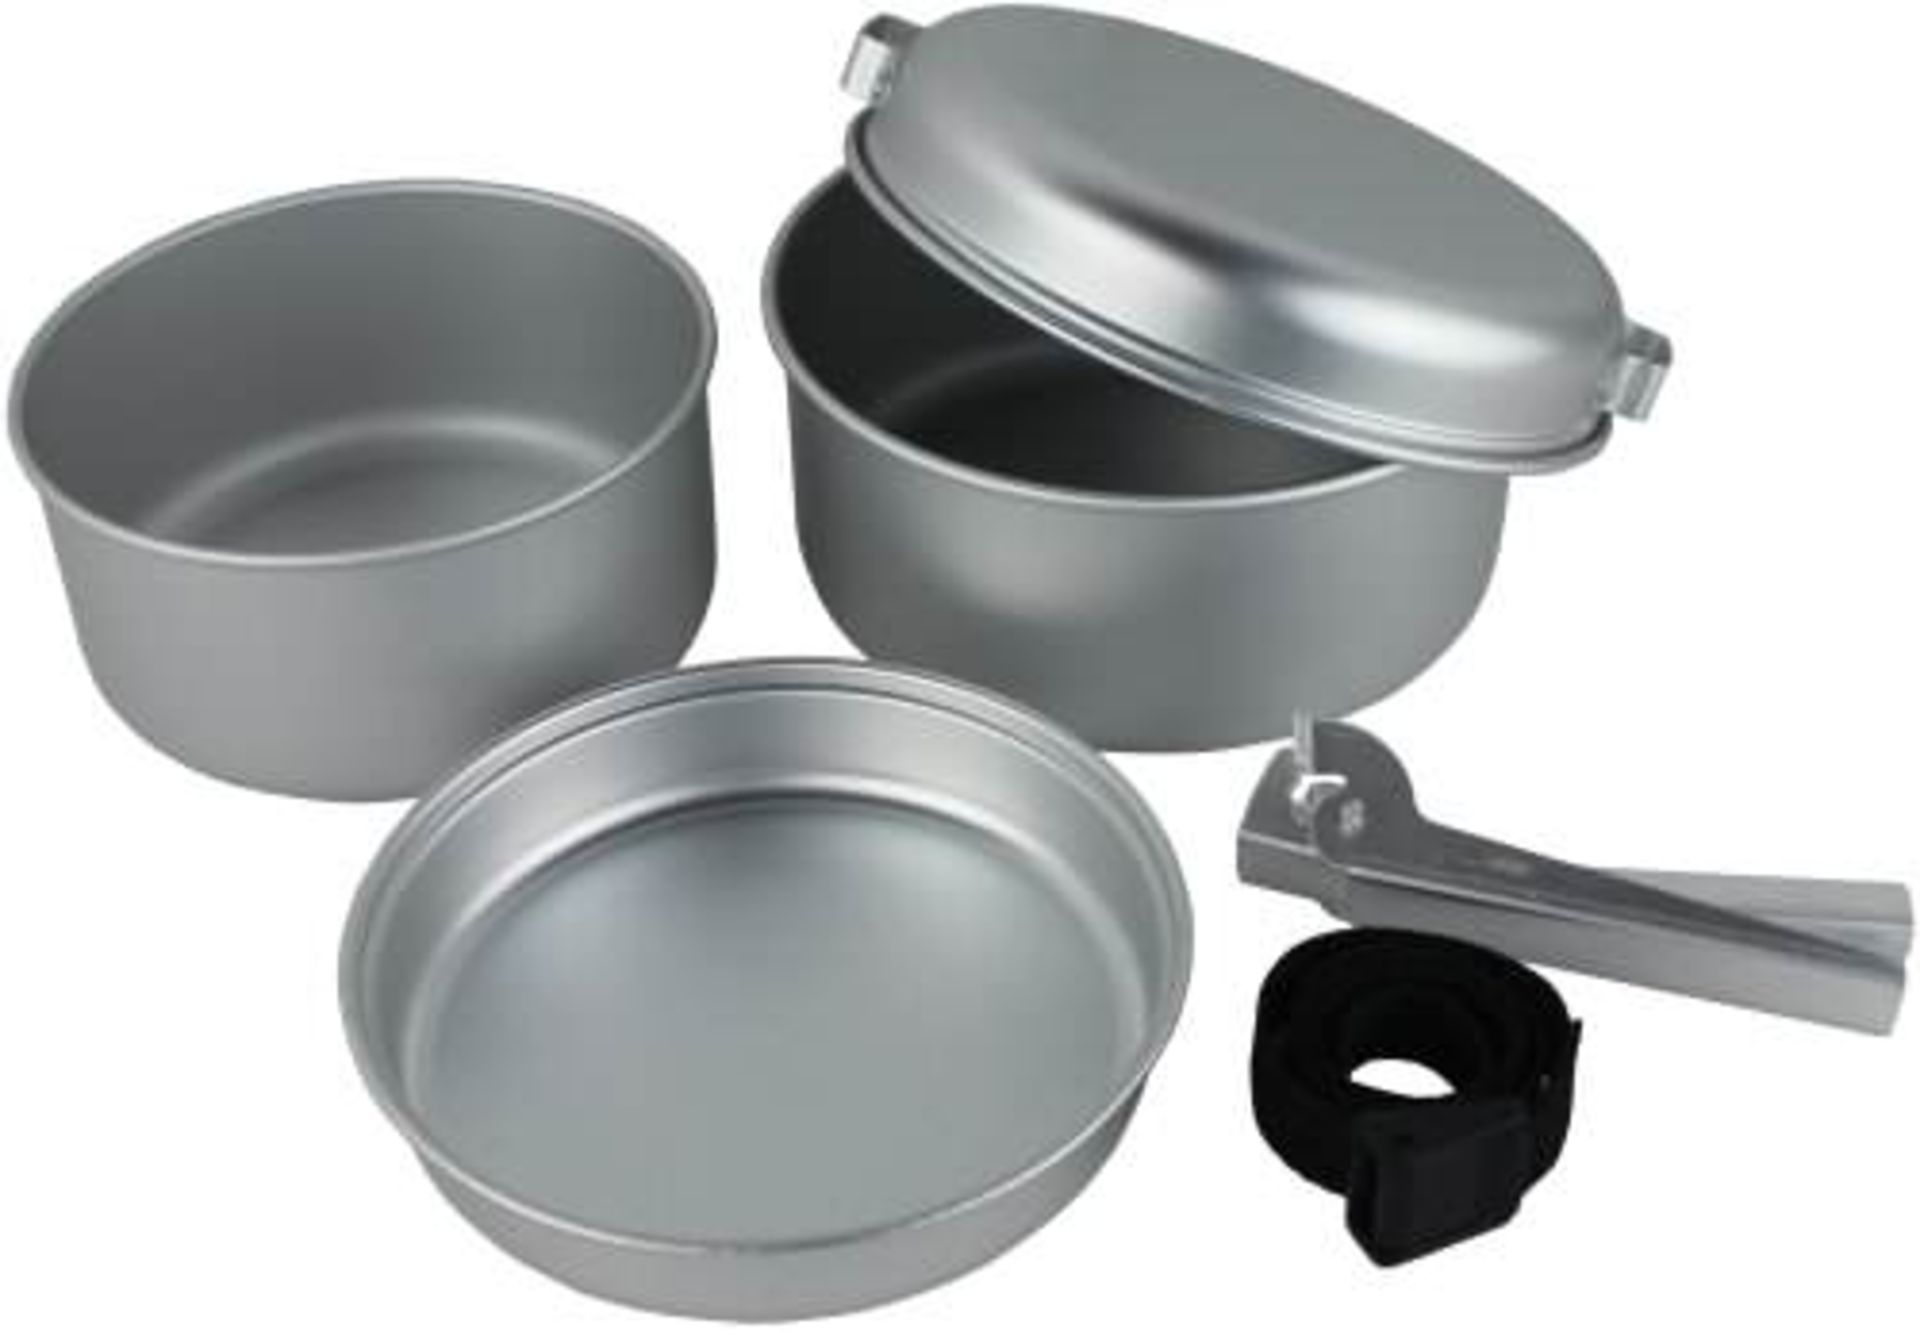 V Brand New 5Pce Aluminium Cook Set Inc 2 Saucepans 1 Frying Pan Etc